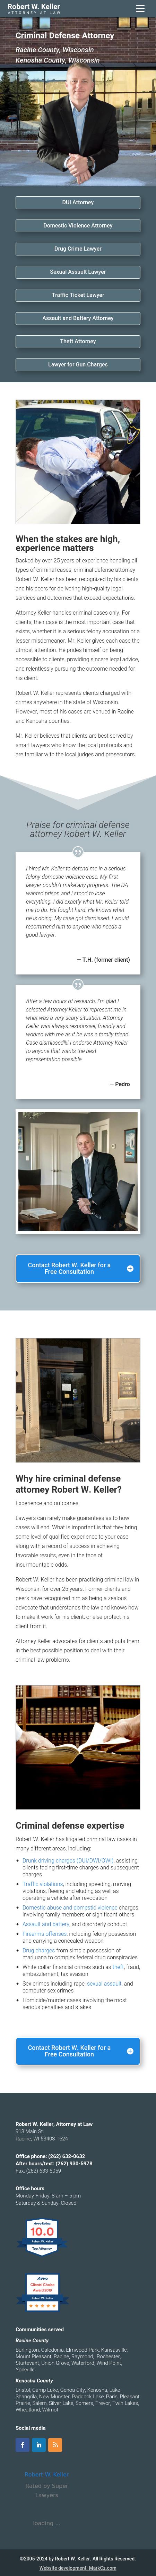 Robert W. Keller Attorney At Law - Racine WI Lawyers